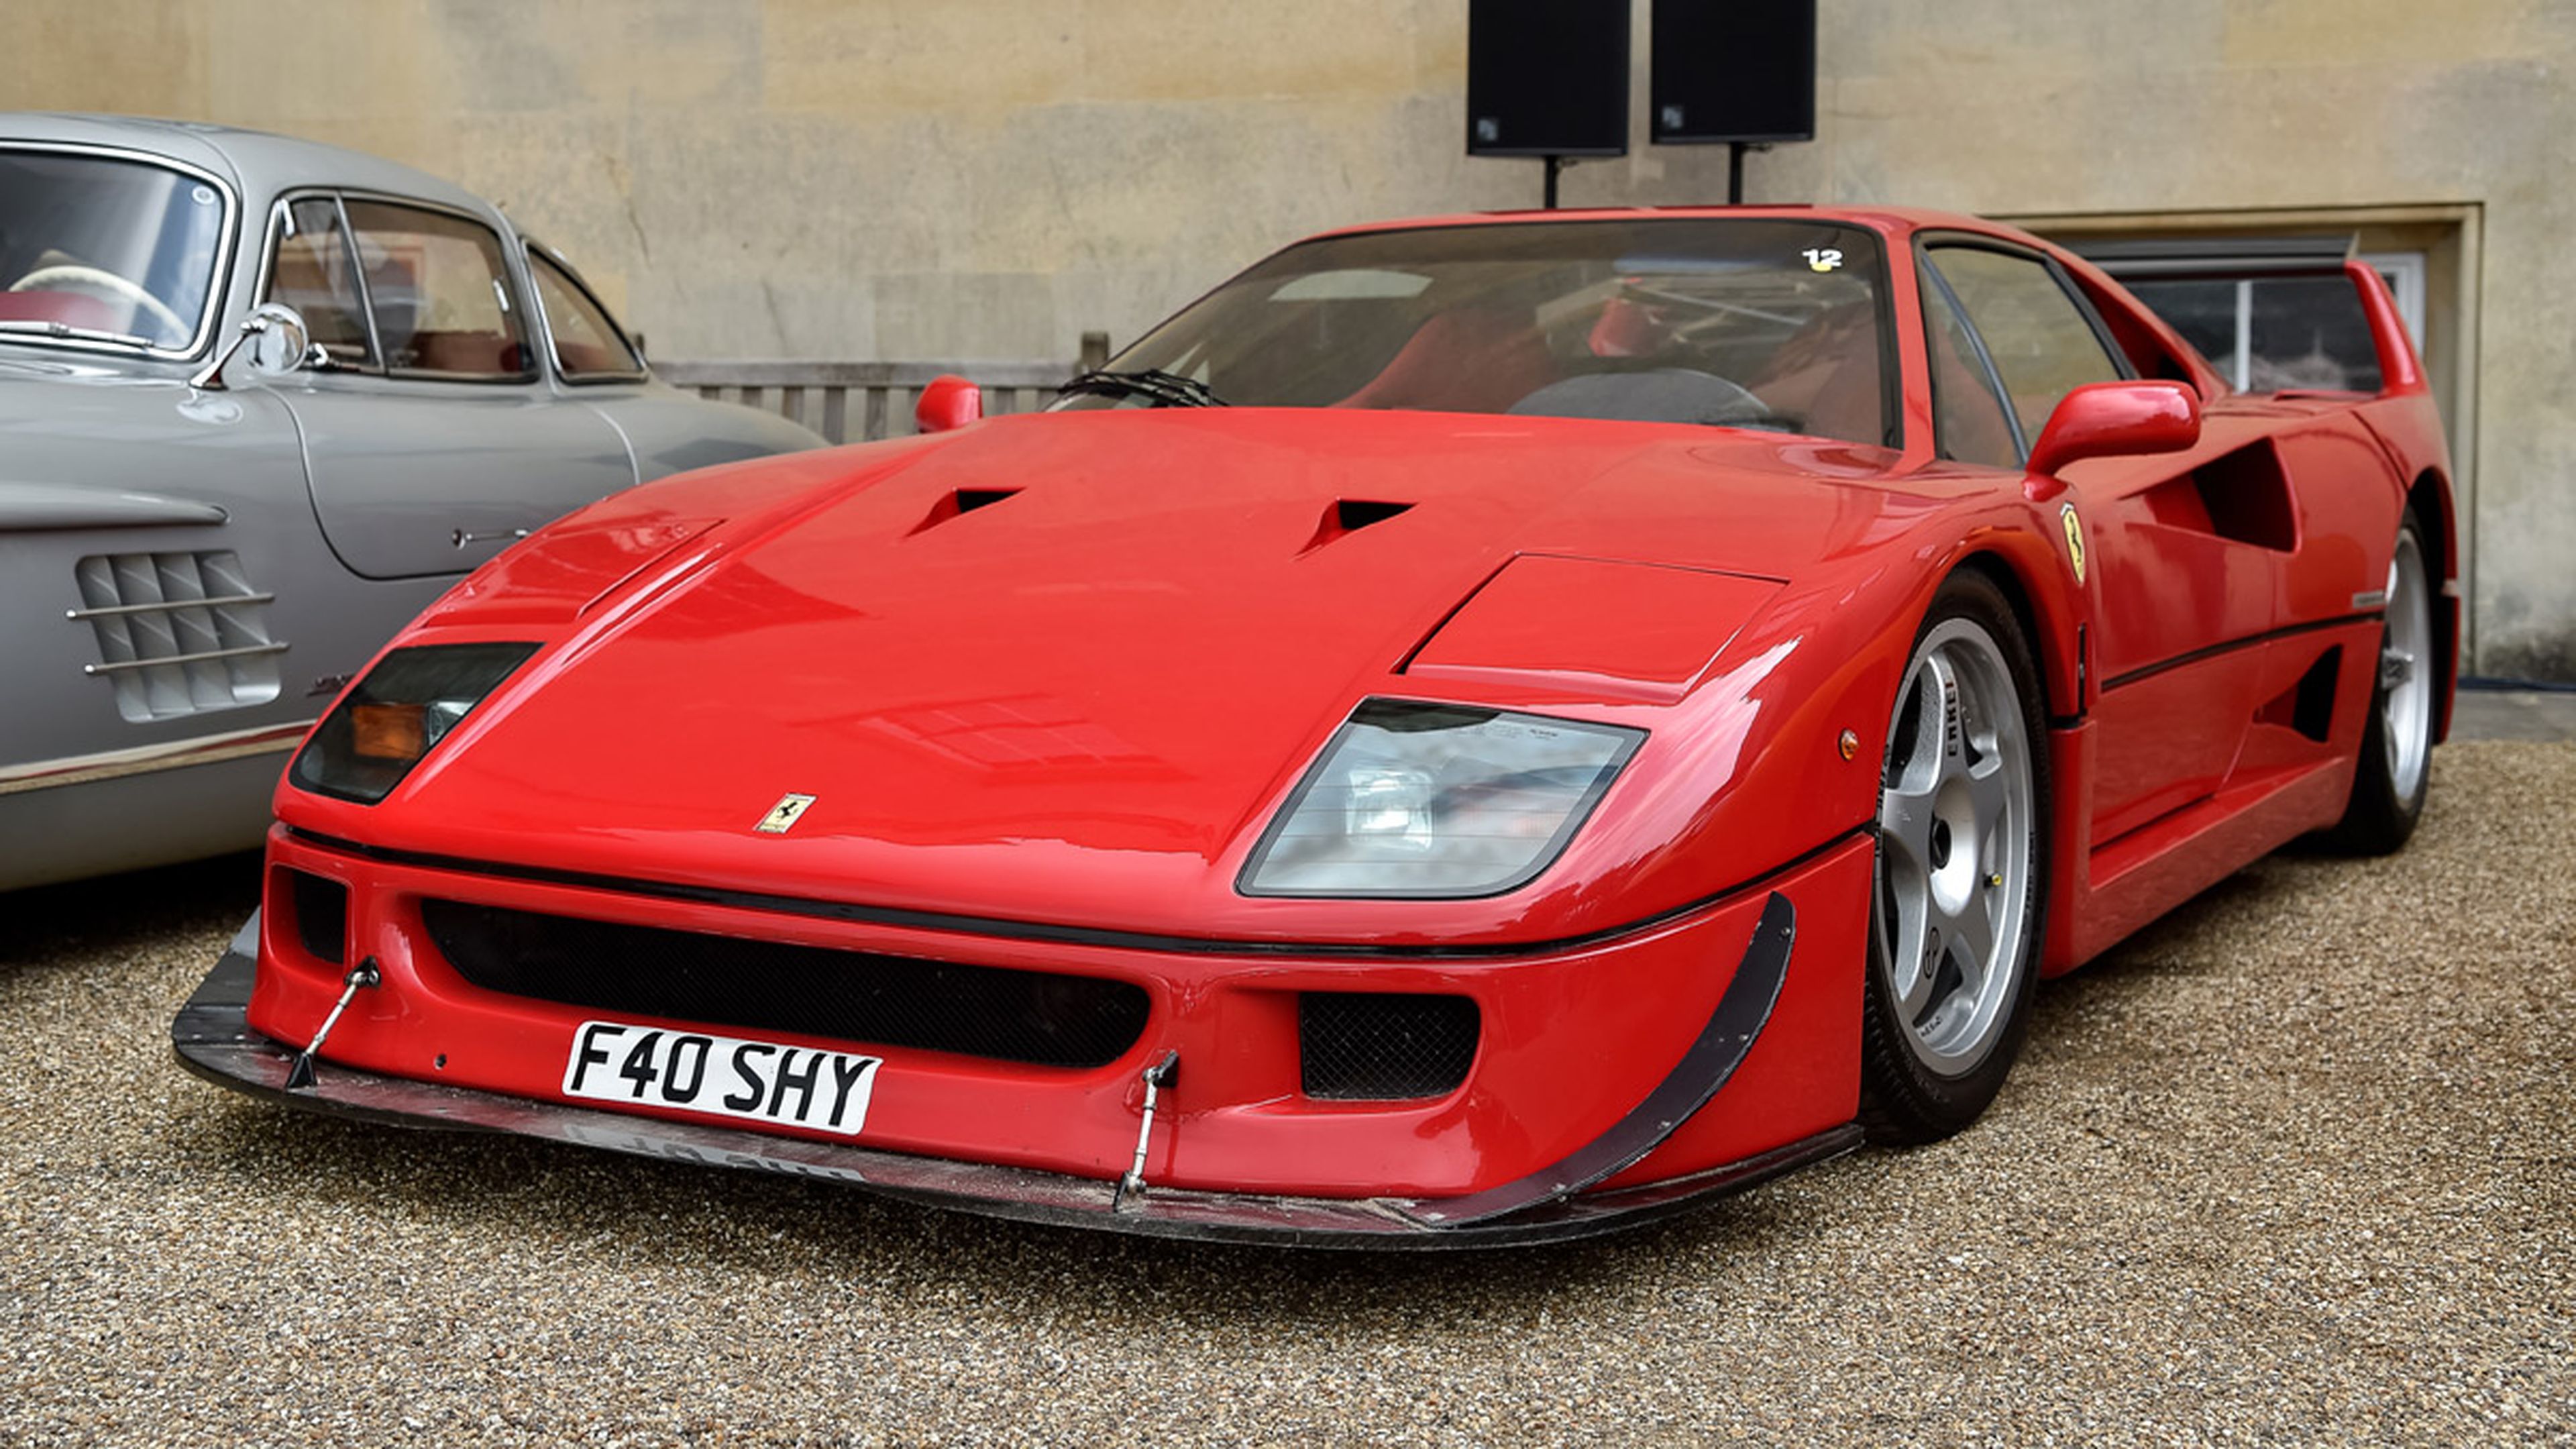 coches-jordi-pujol-ferrusola-Ferrari-F40